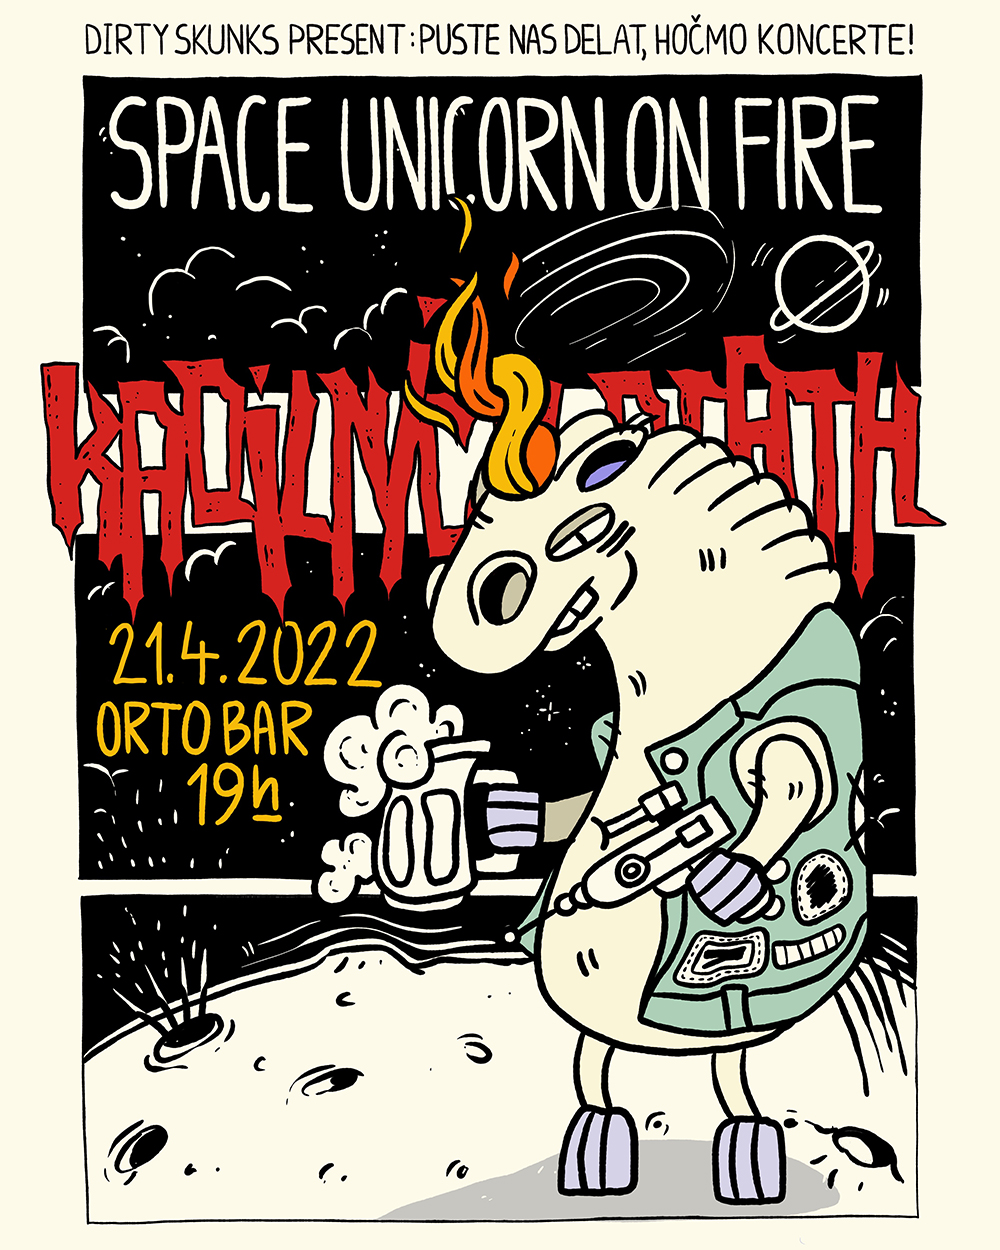 21.04.2022 - Kadilnica of Death: Space Unicorn On Fire (Slo) @ Orto Bar, Ljubljana